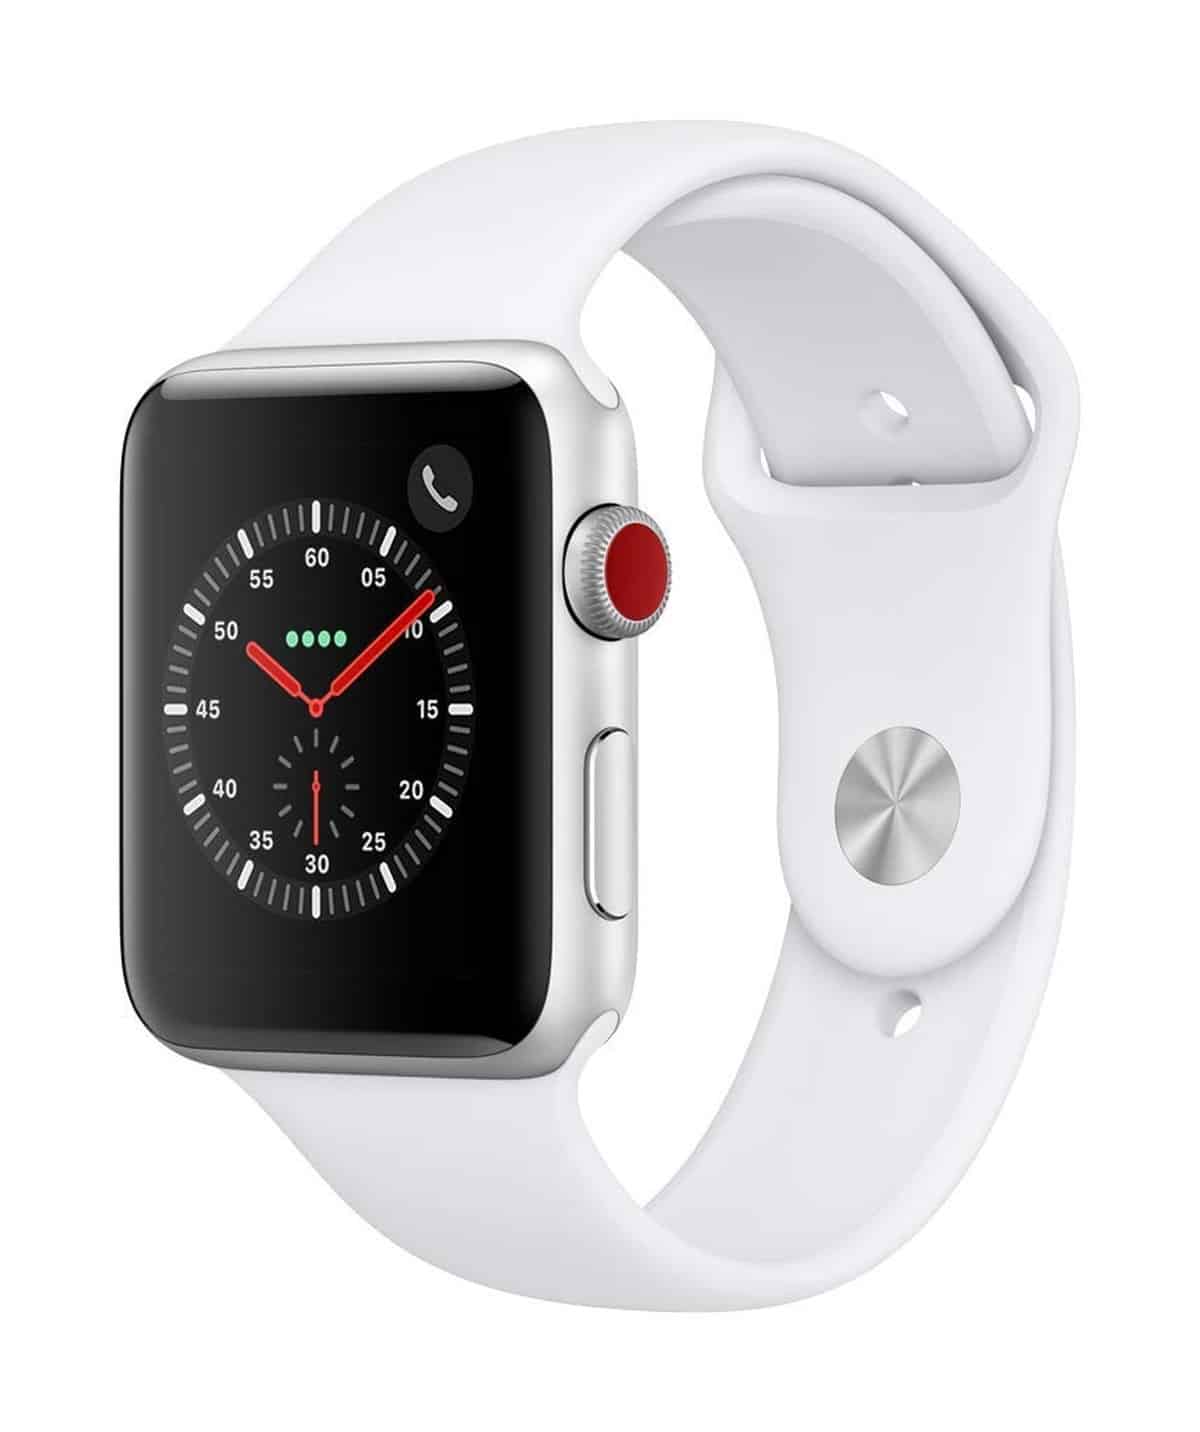 Apple Watch Series 3 |Unique Wearable Technology Gadgets